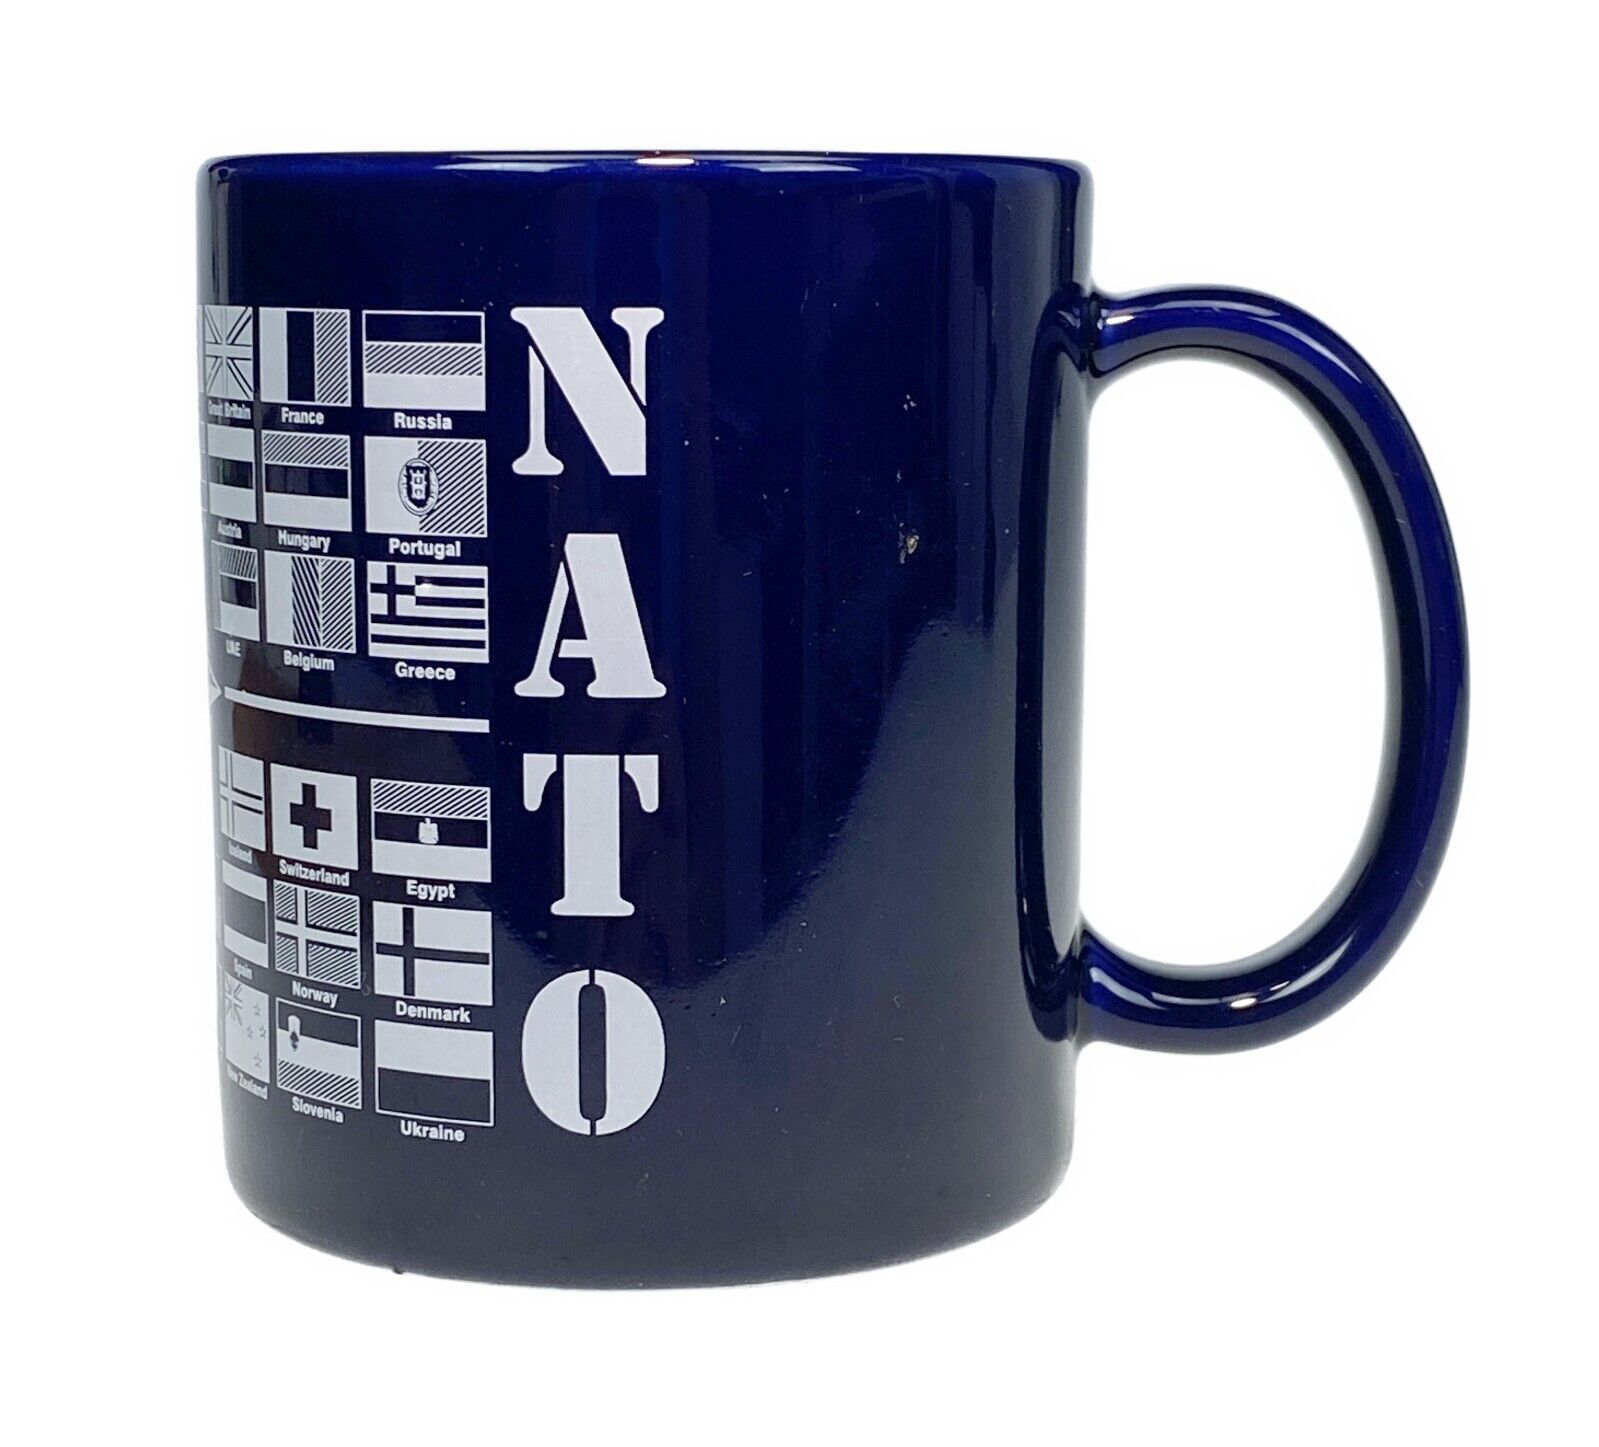 KFOR NATO Flags Cup Mug Blue Ceramic Kosovo Force